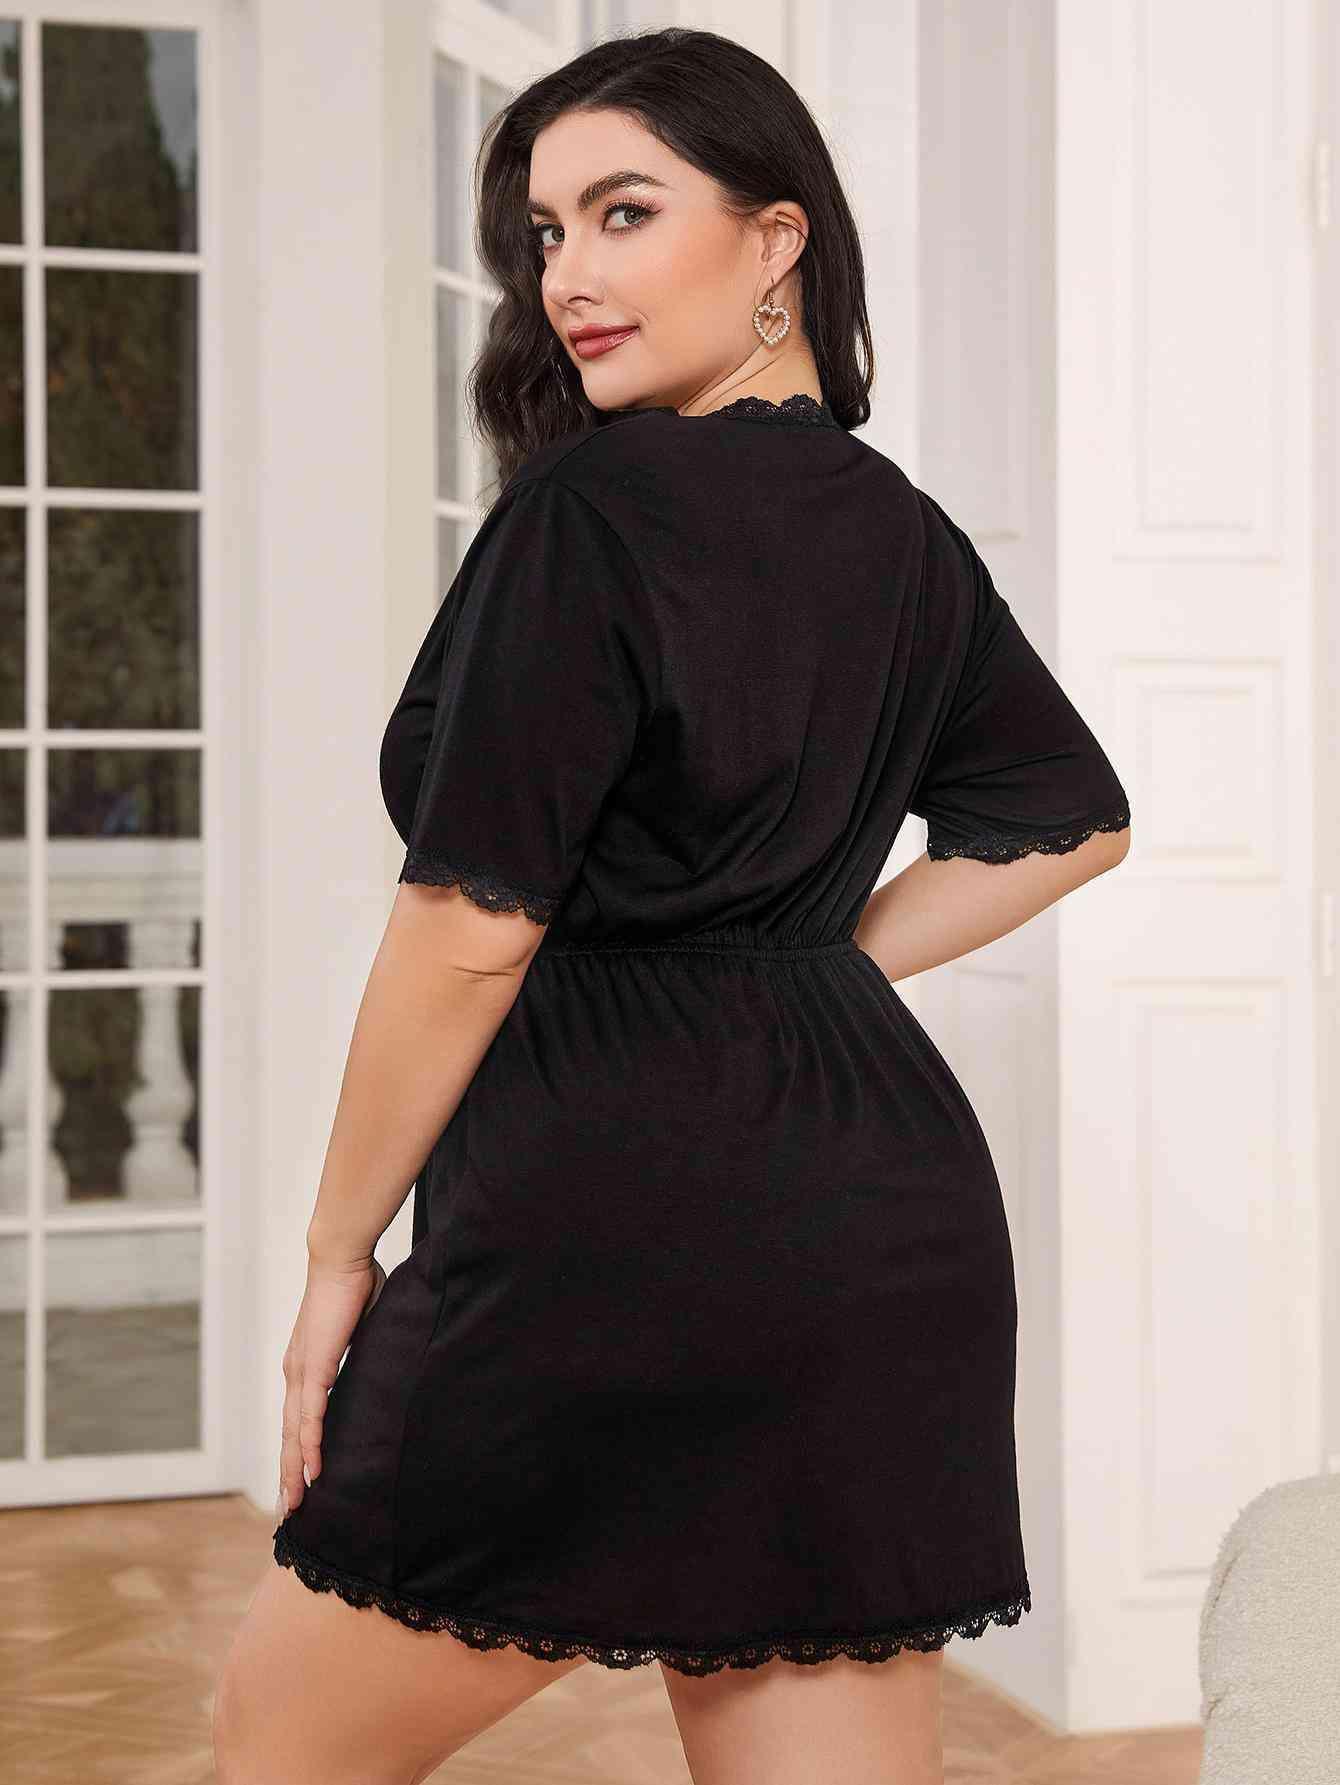 Scalloped Lace Trim Plus Size Black Nightgown - MXSTUDIO.COM